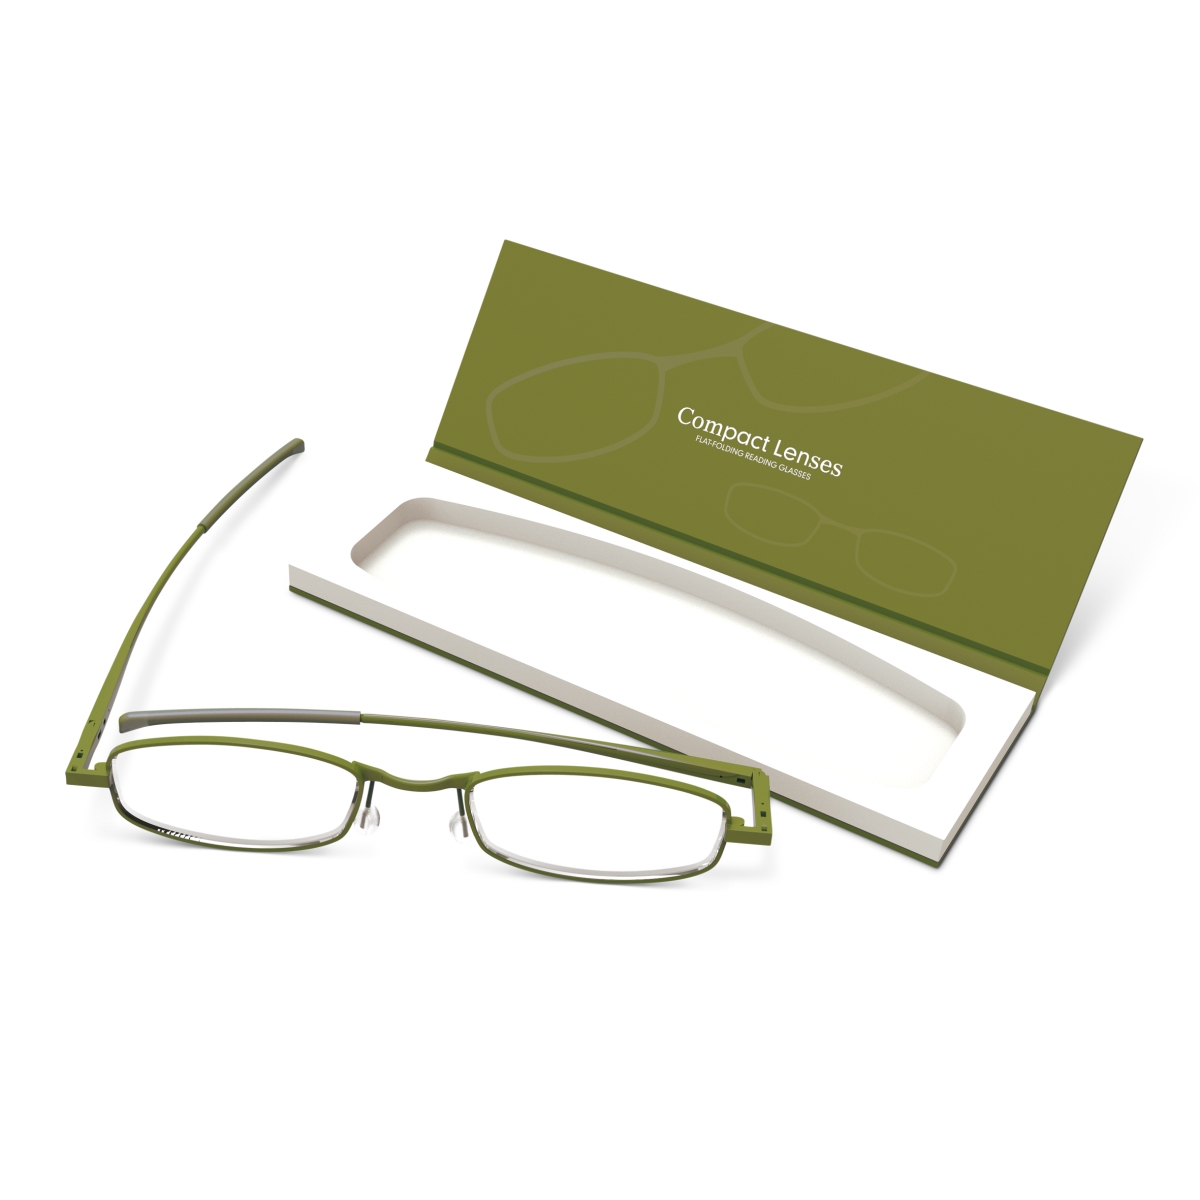 If USA 91728 Compact Lens Flat Folding Reading Glasses, Olive - Plus 2.0